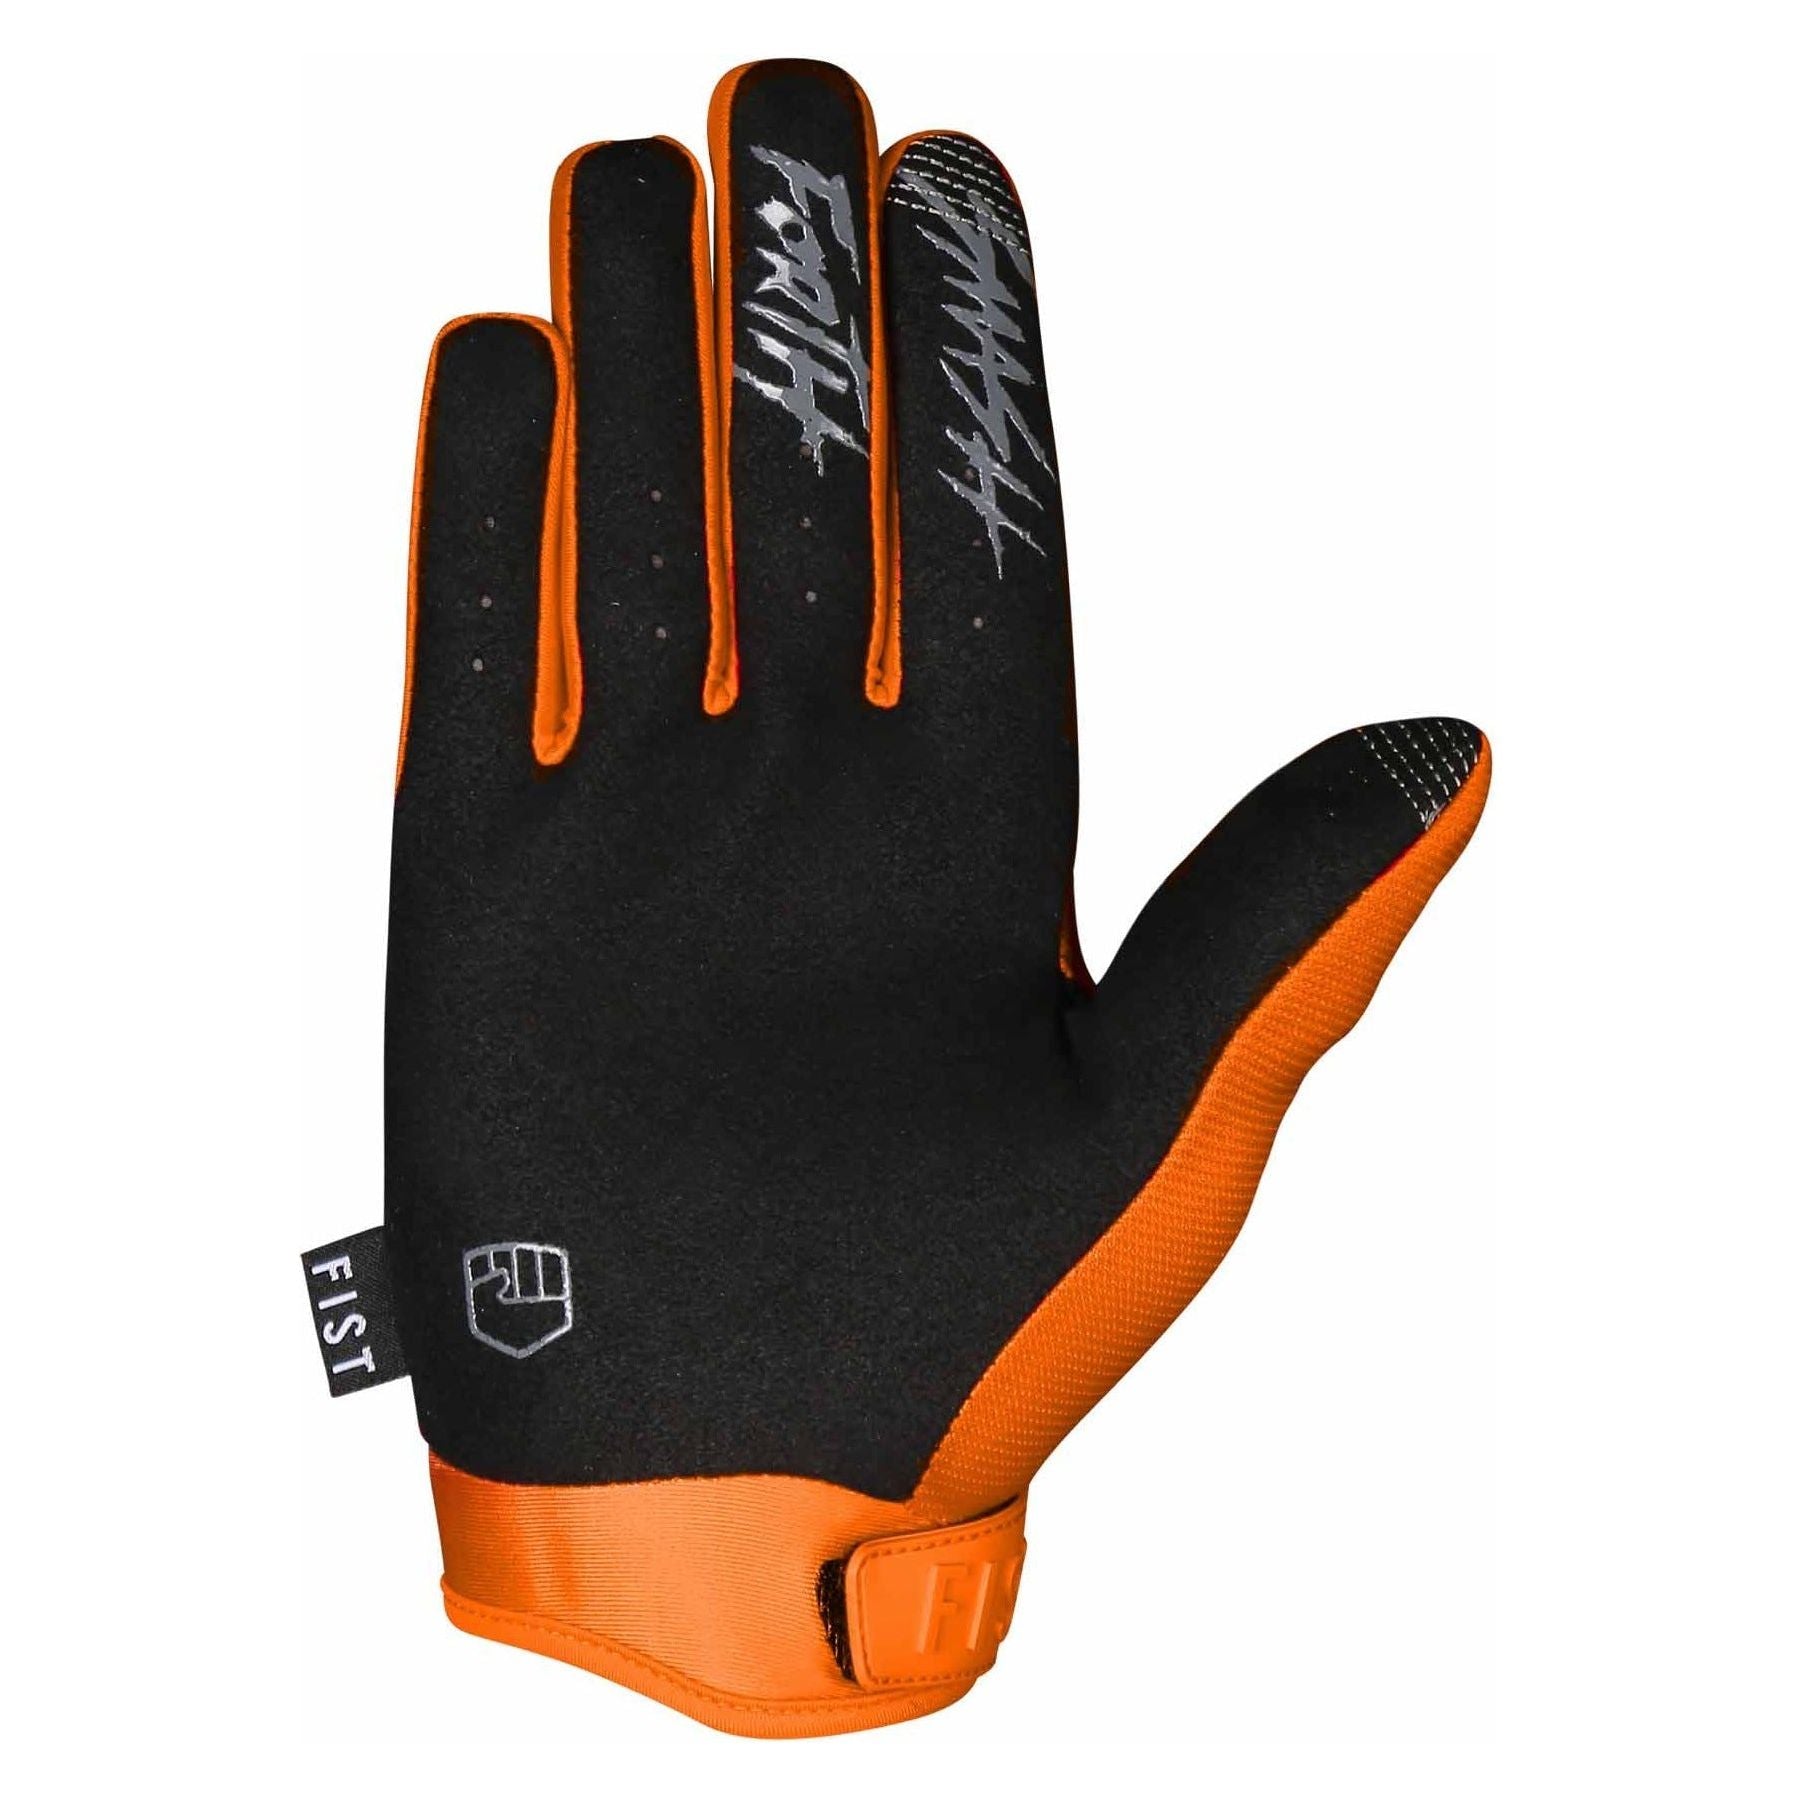 Fist Handwear Stocker Youth Strapped Glove - Youth S - Orange Stocker - Image 2